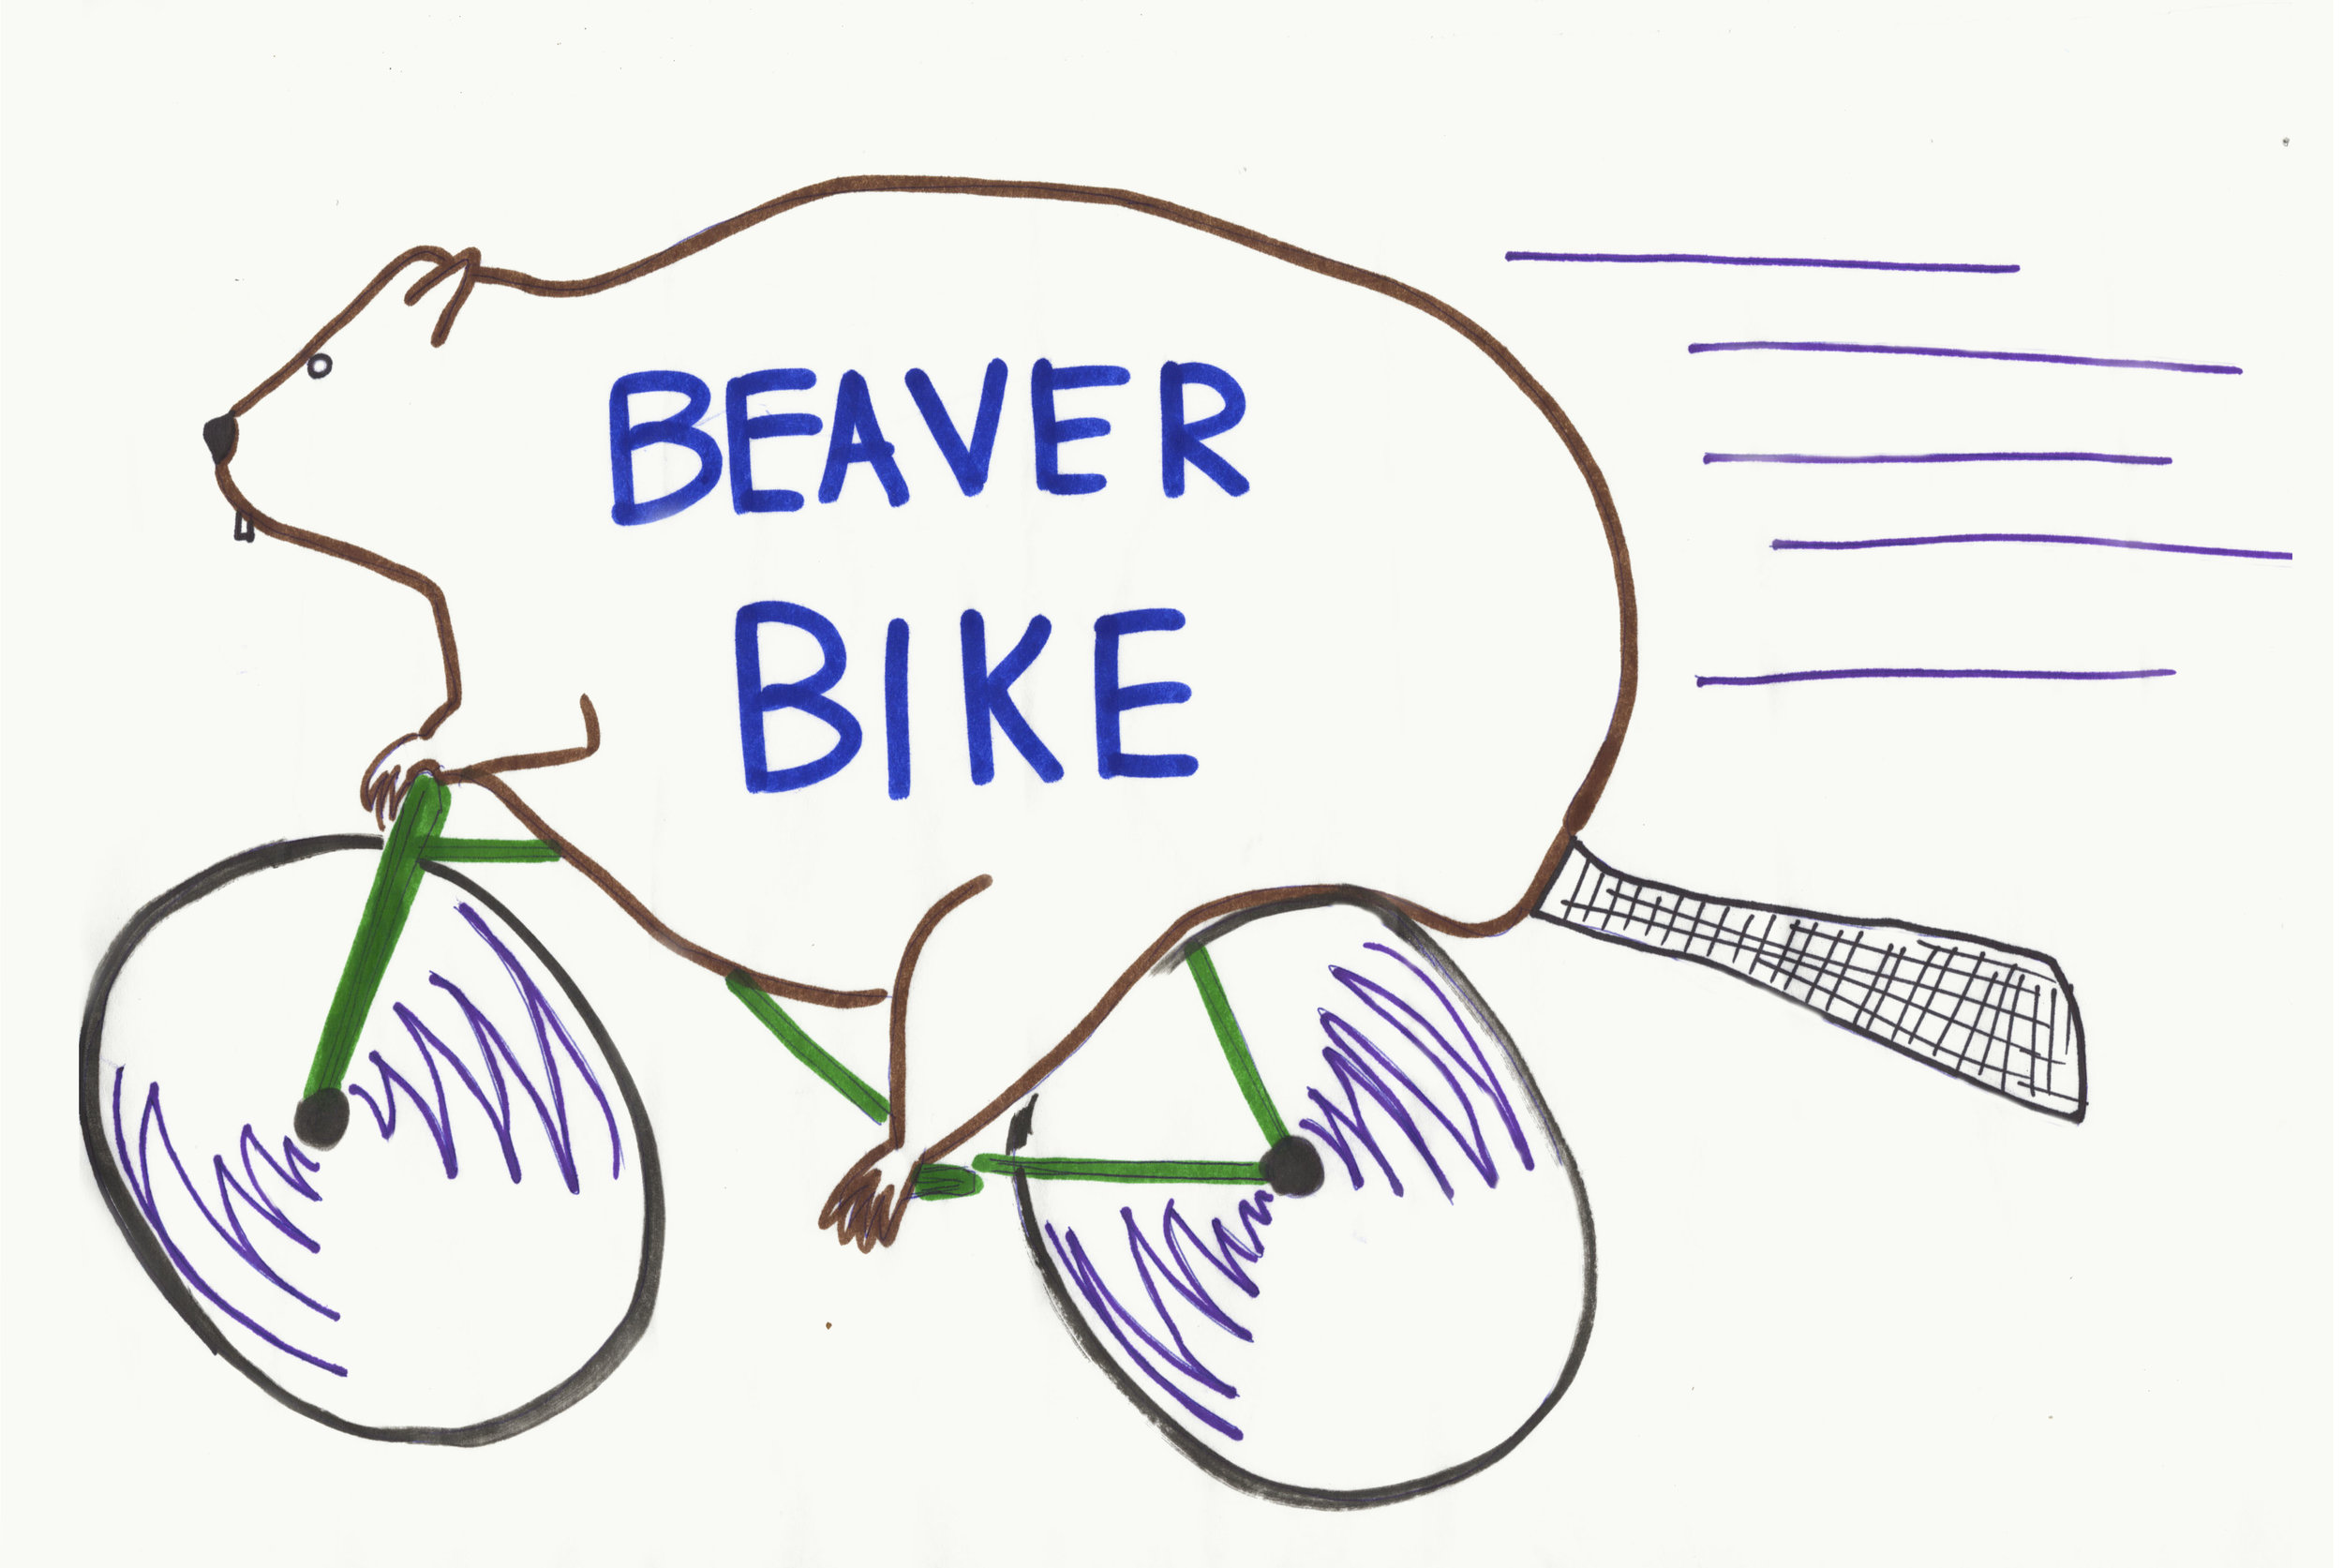  Beaver Bike 